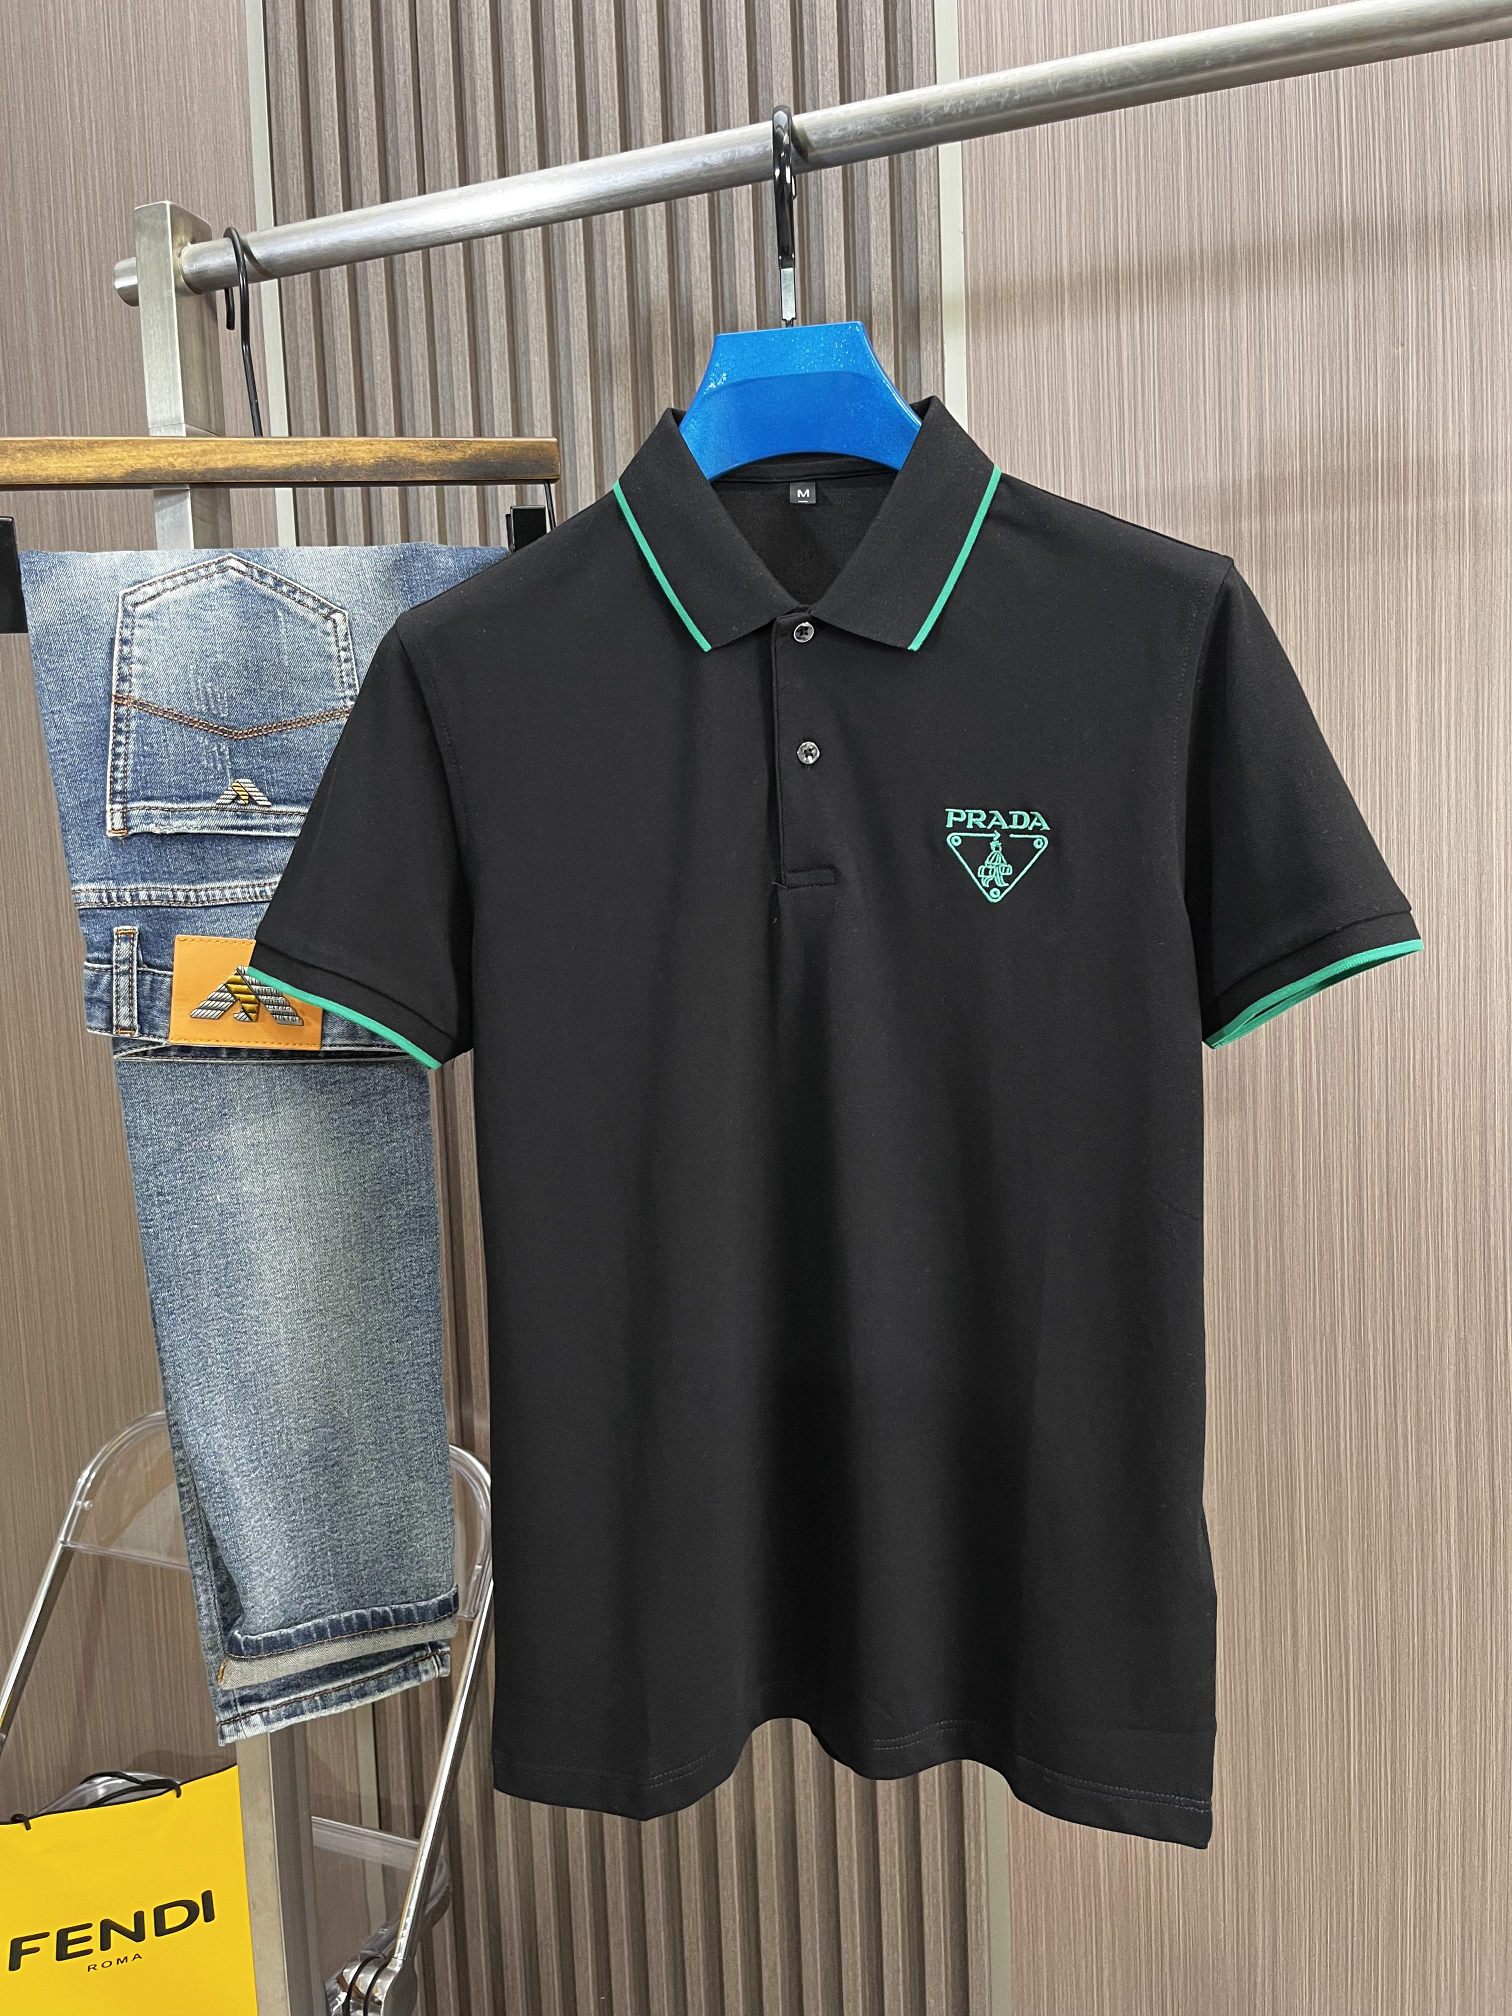 Prada Clothing Polo T-Shirt Short Sleeve